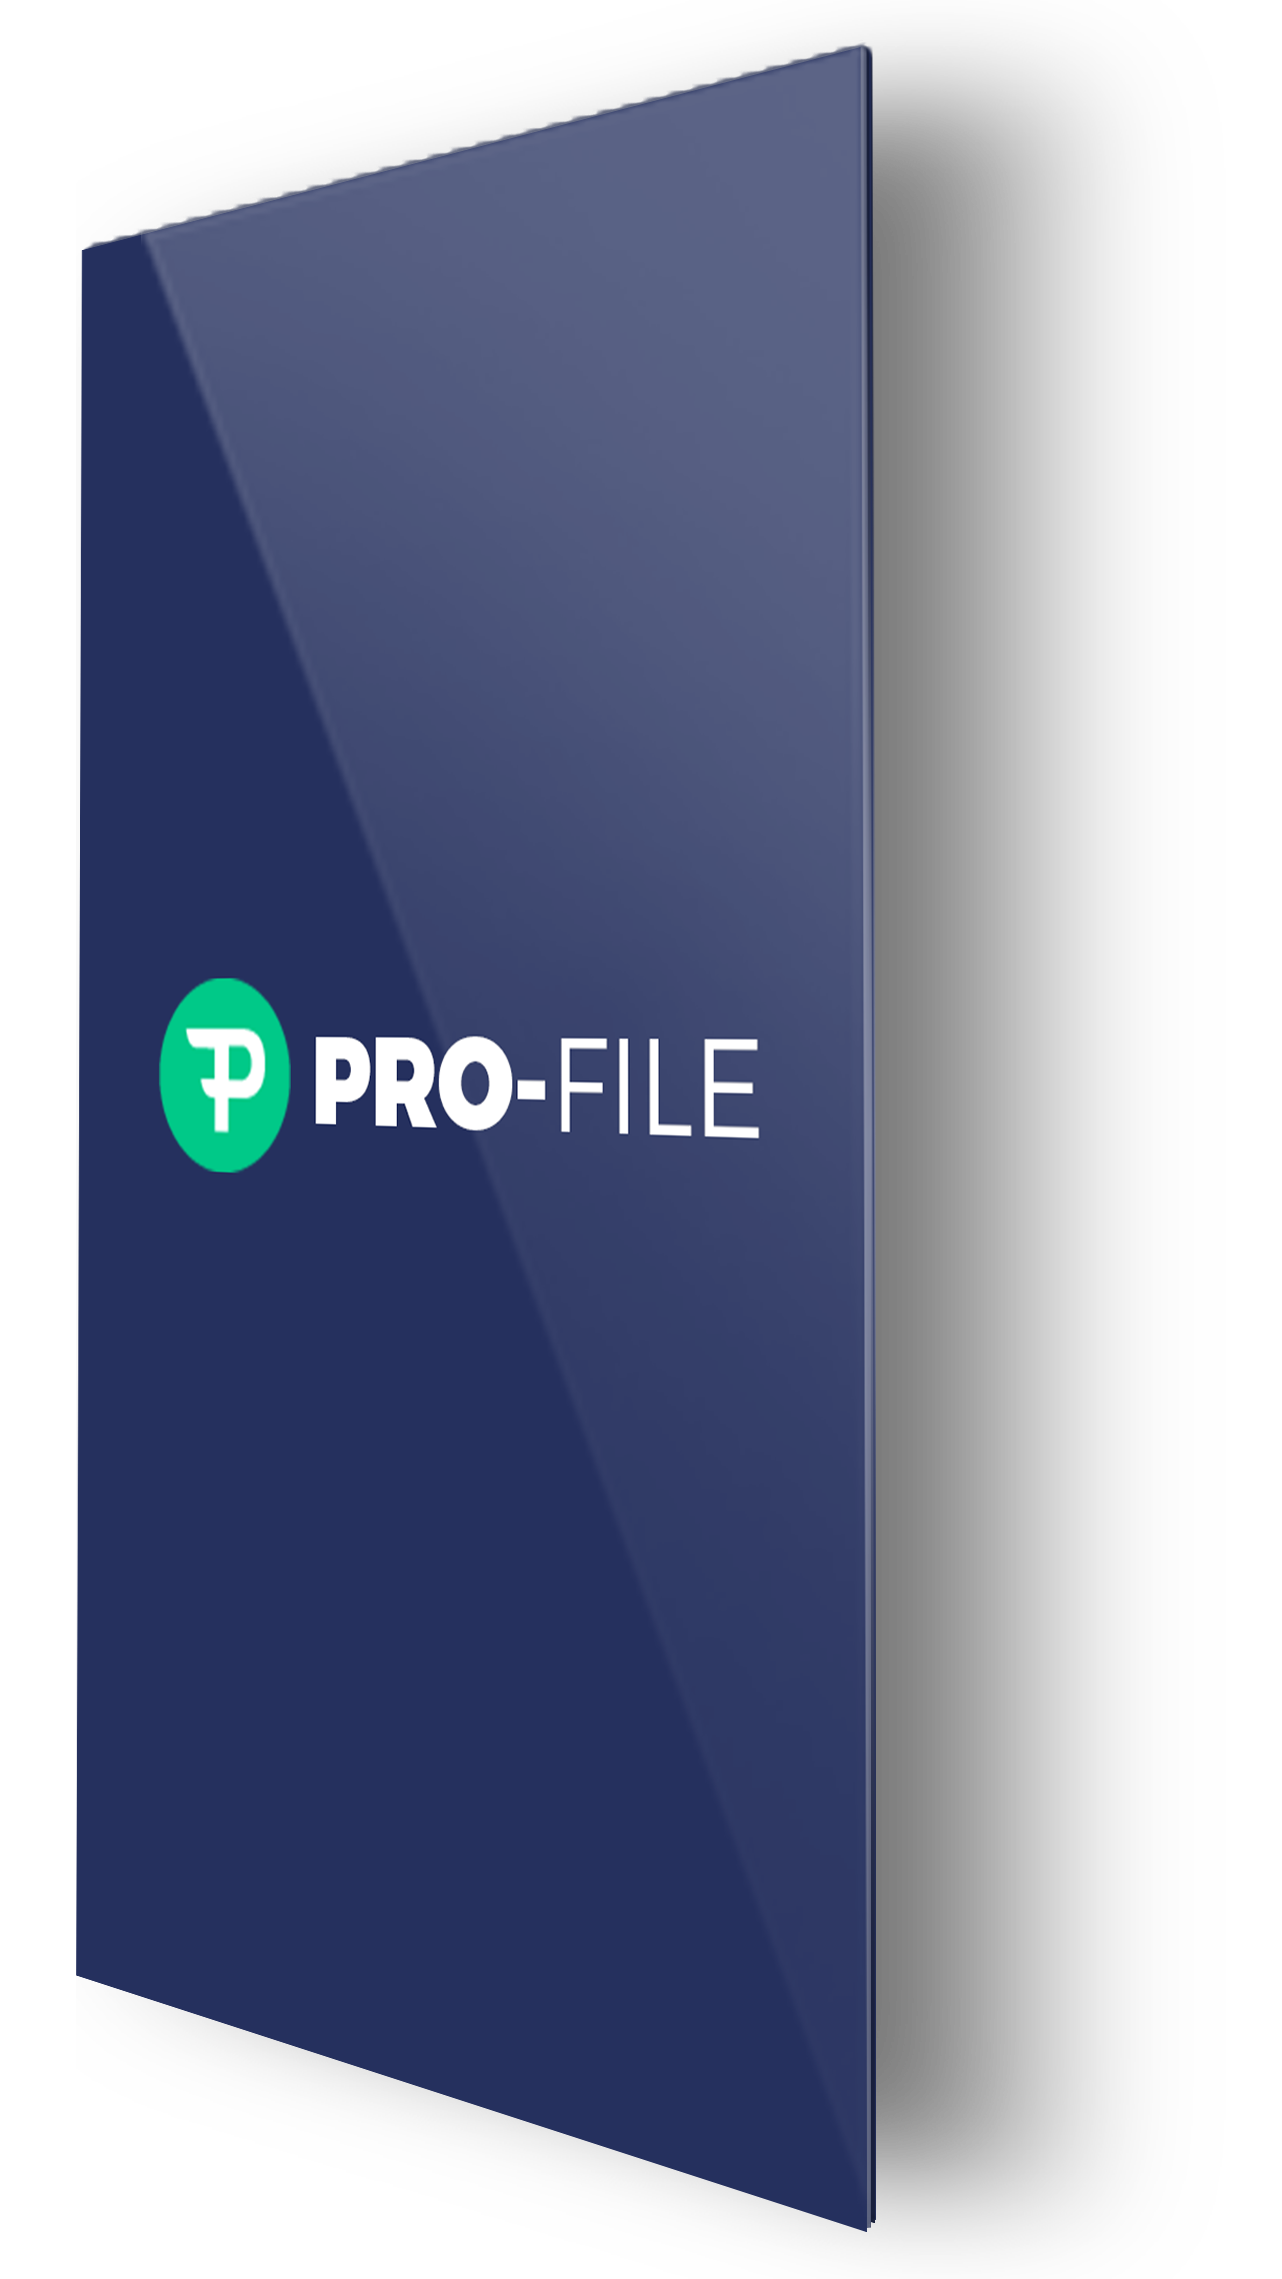 Pro-File Image